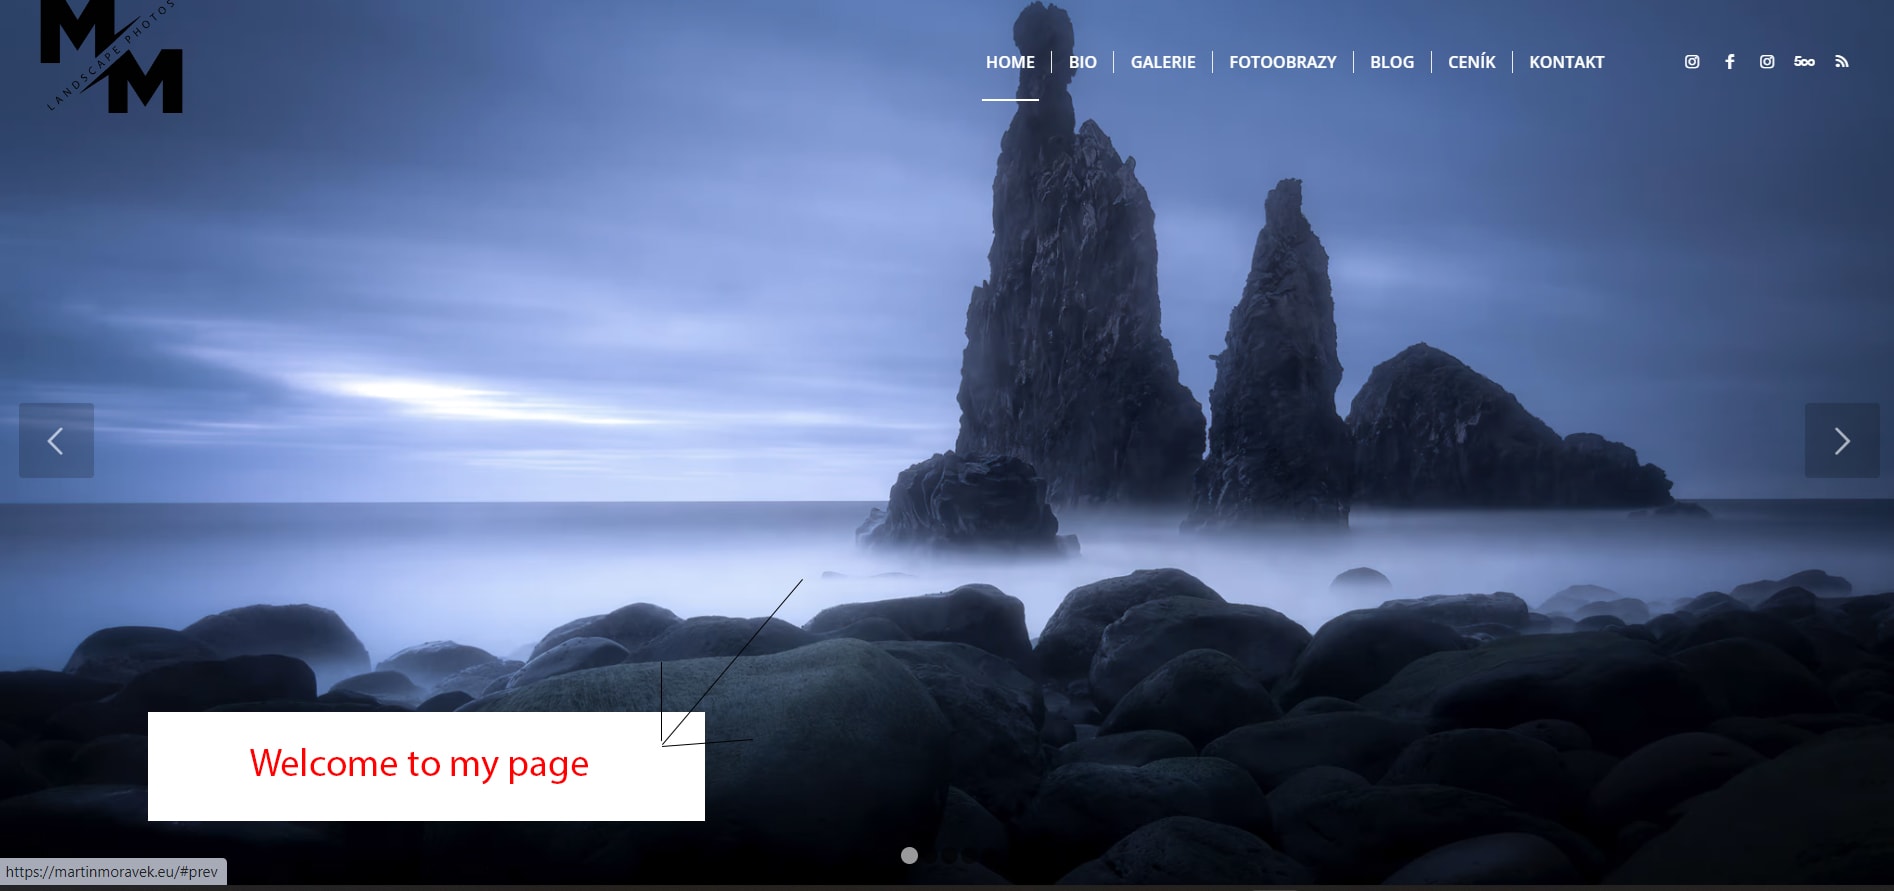 image of homepage